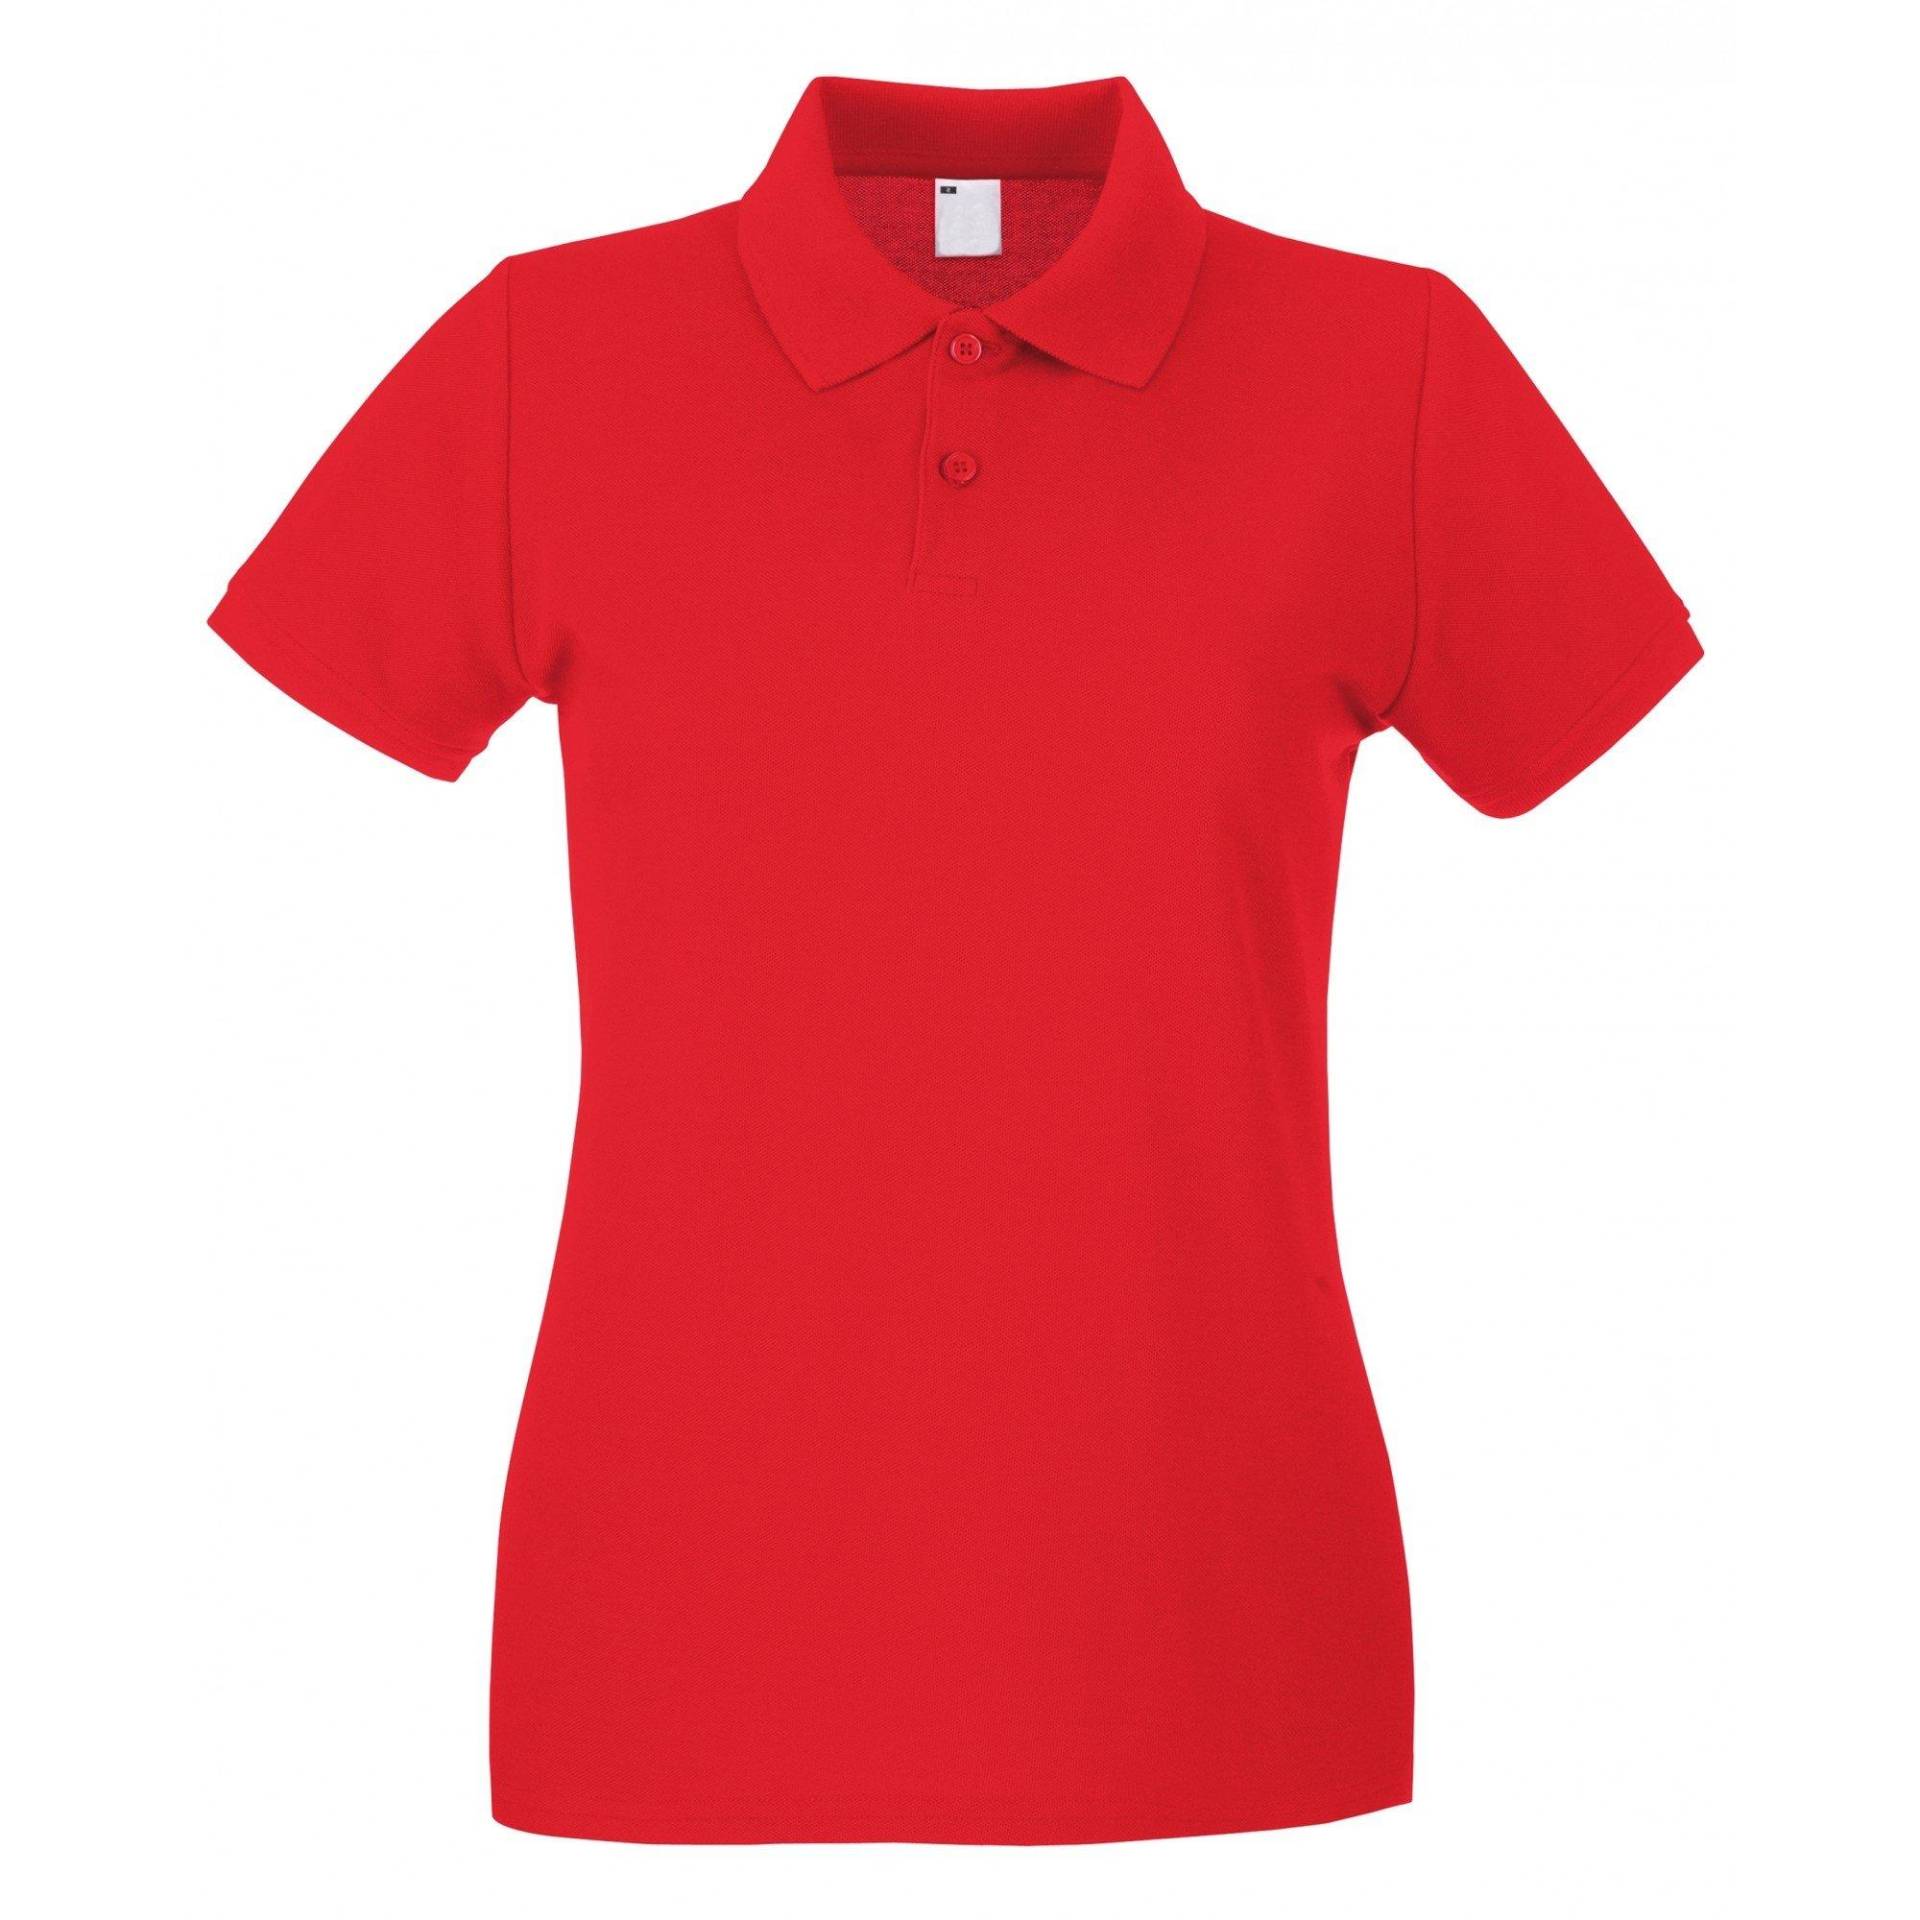 Poloshirt, Figurbetont, Kurzärmlig Damen Rot Bunt S von Universal Textiles